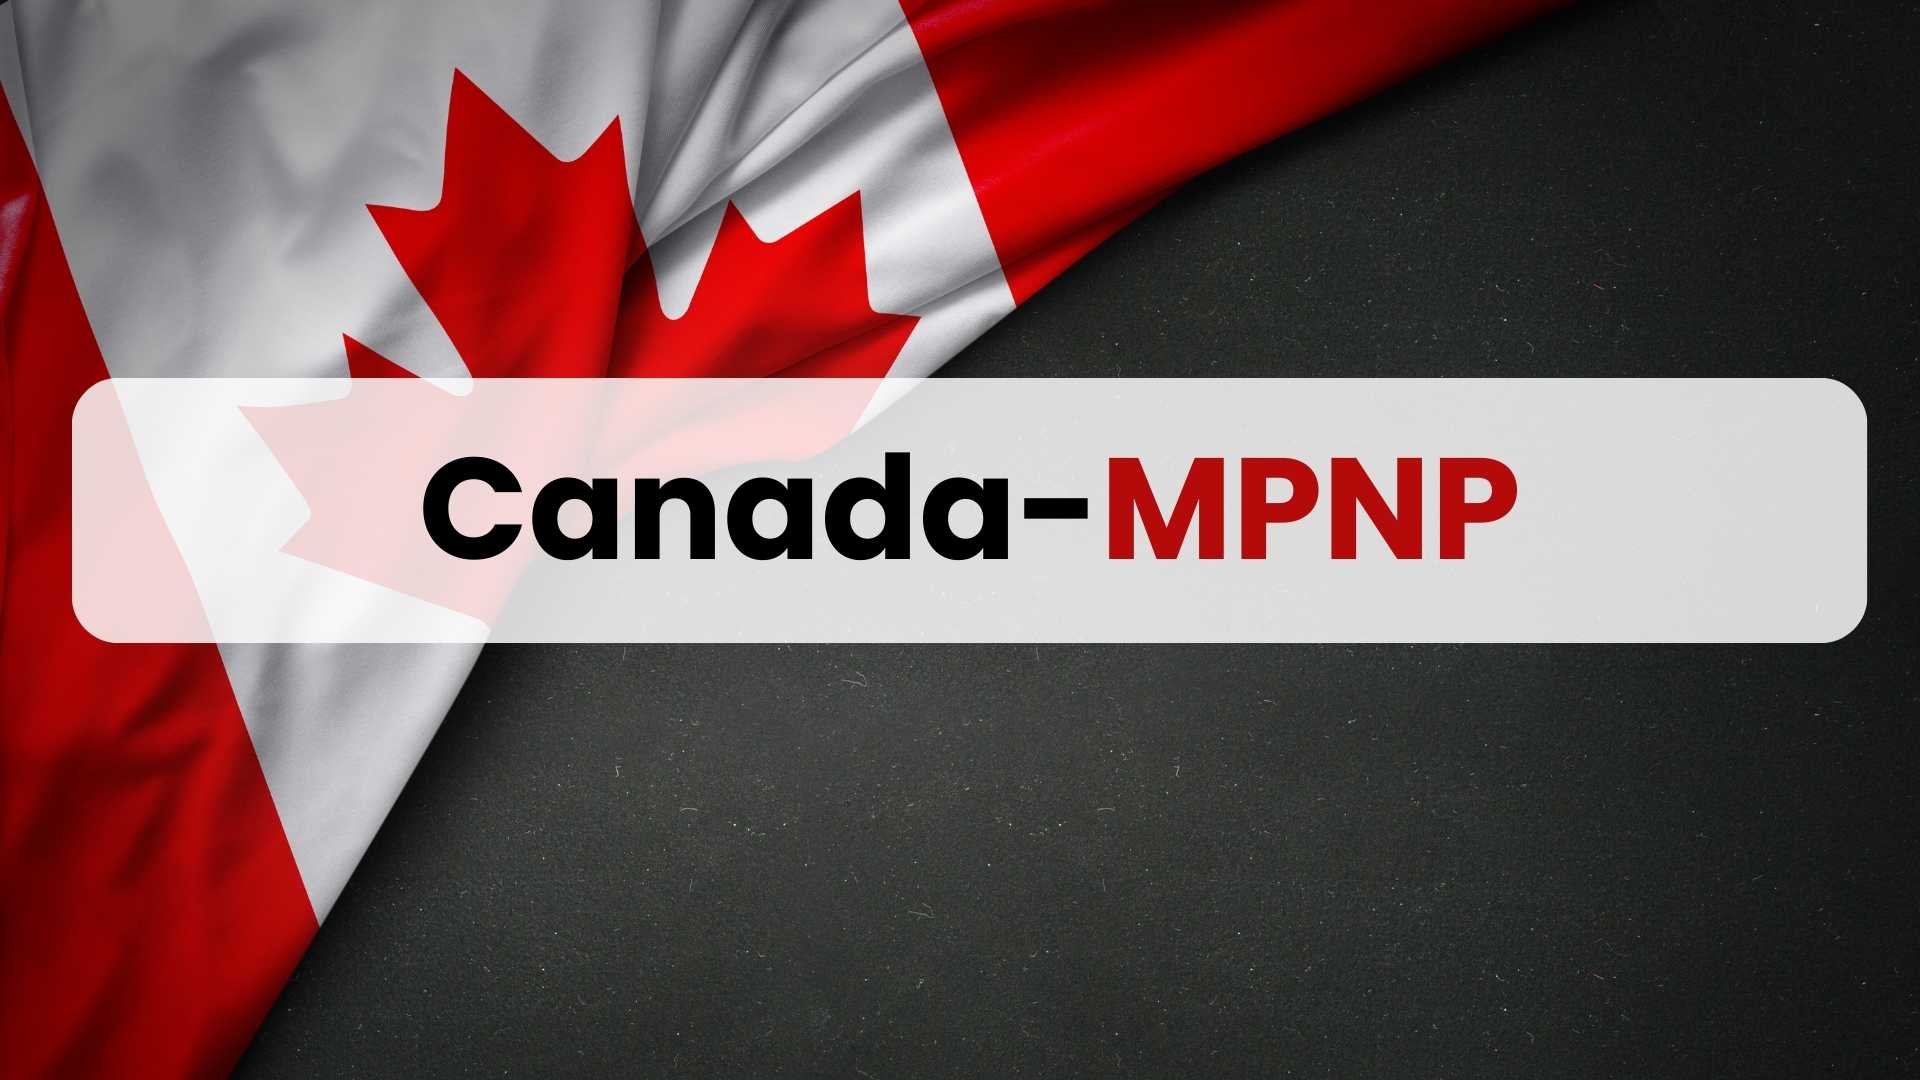 Canada-MPNP (Manitoba Provincial Nominee Program)